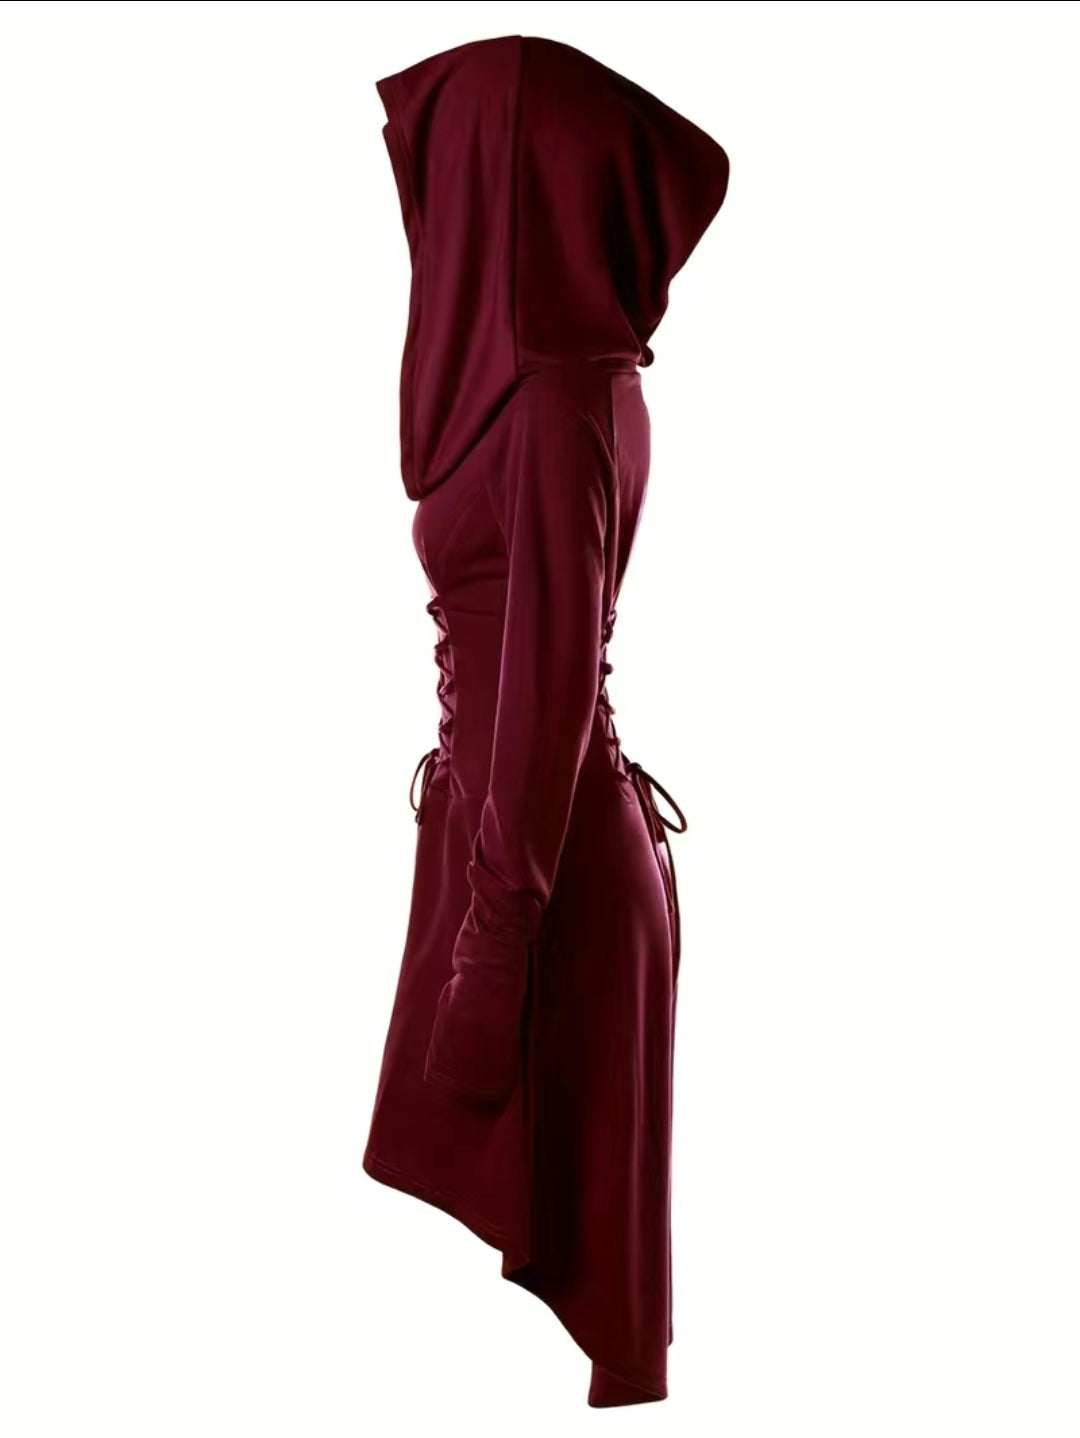 Burgundy Hooded Medieval Dress